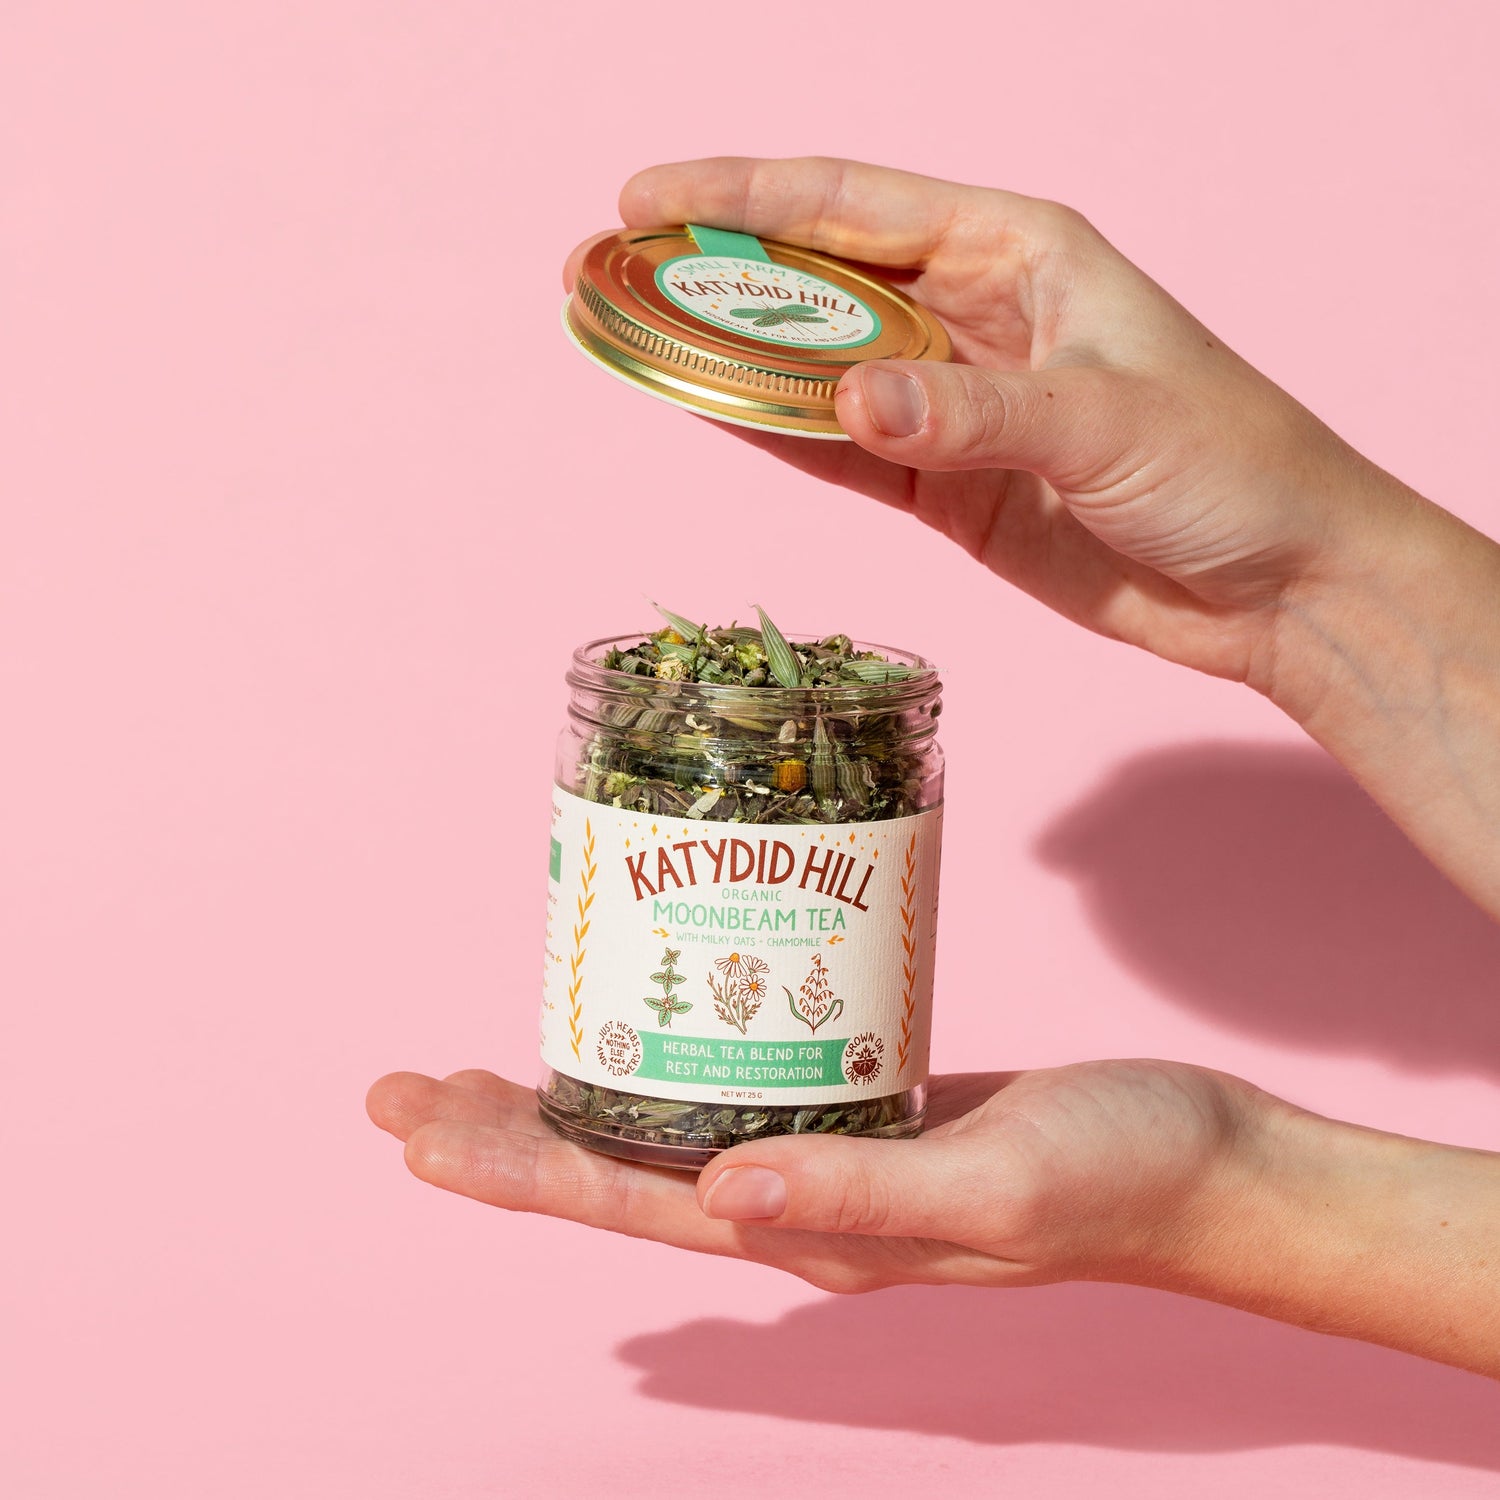 hands holding an open jar of moonbeam loose leaf tea on pink background